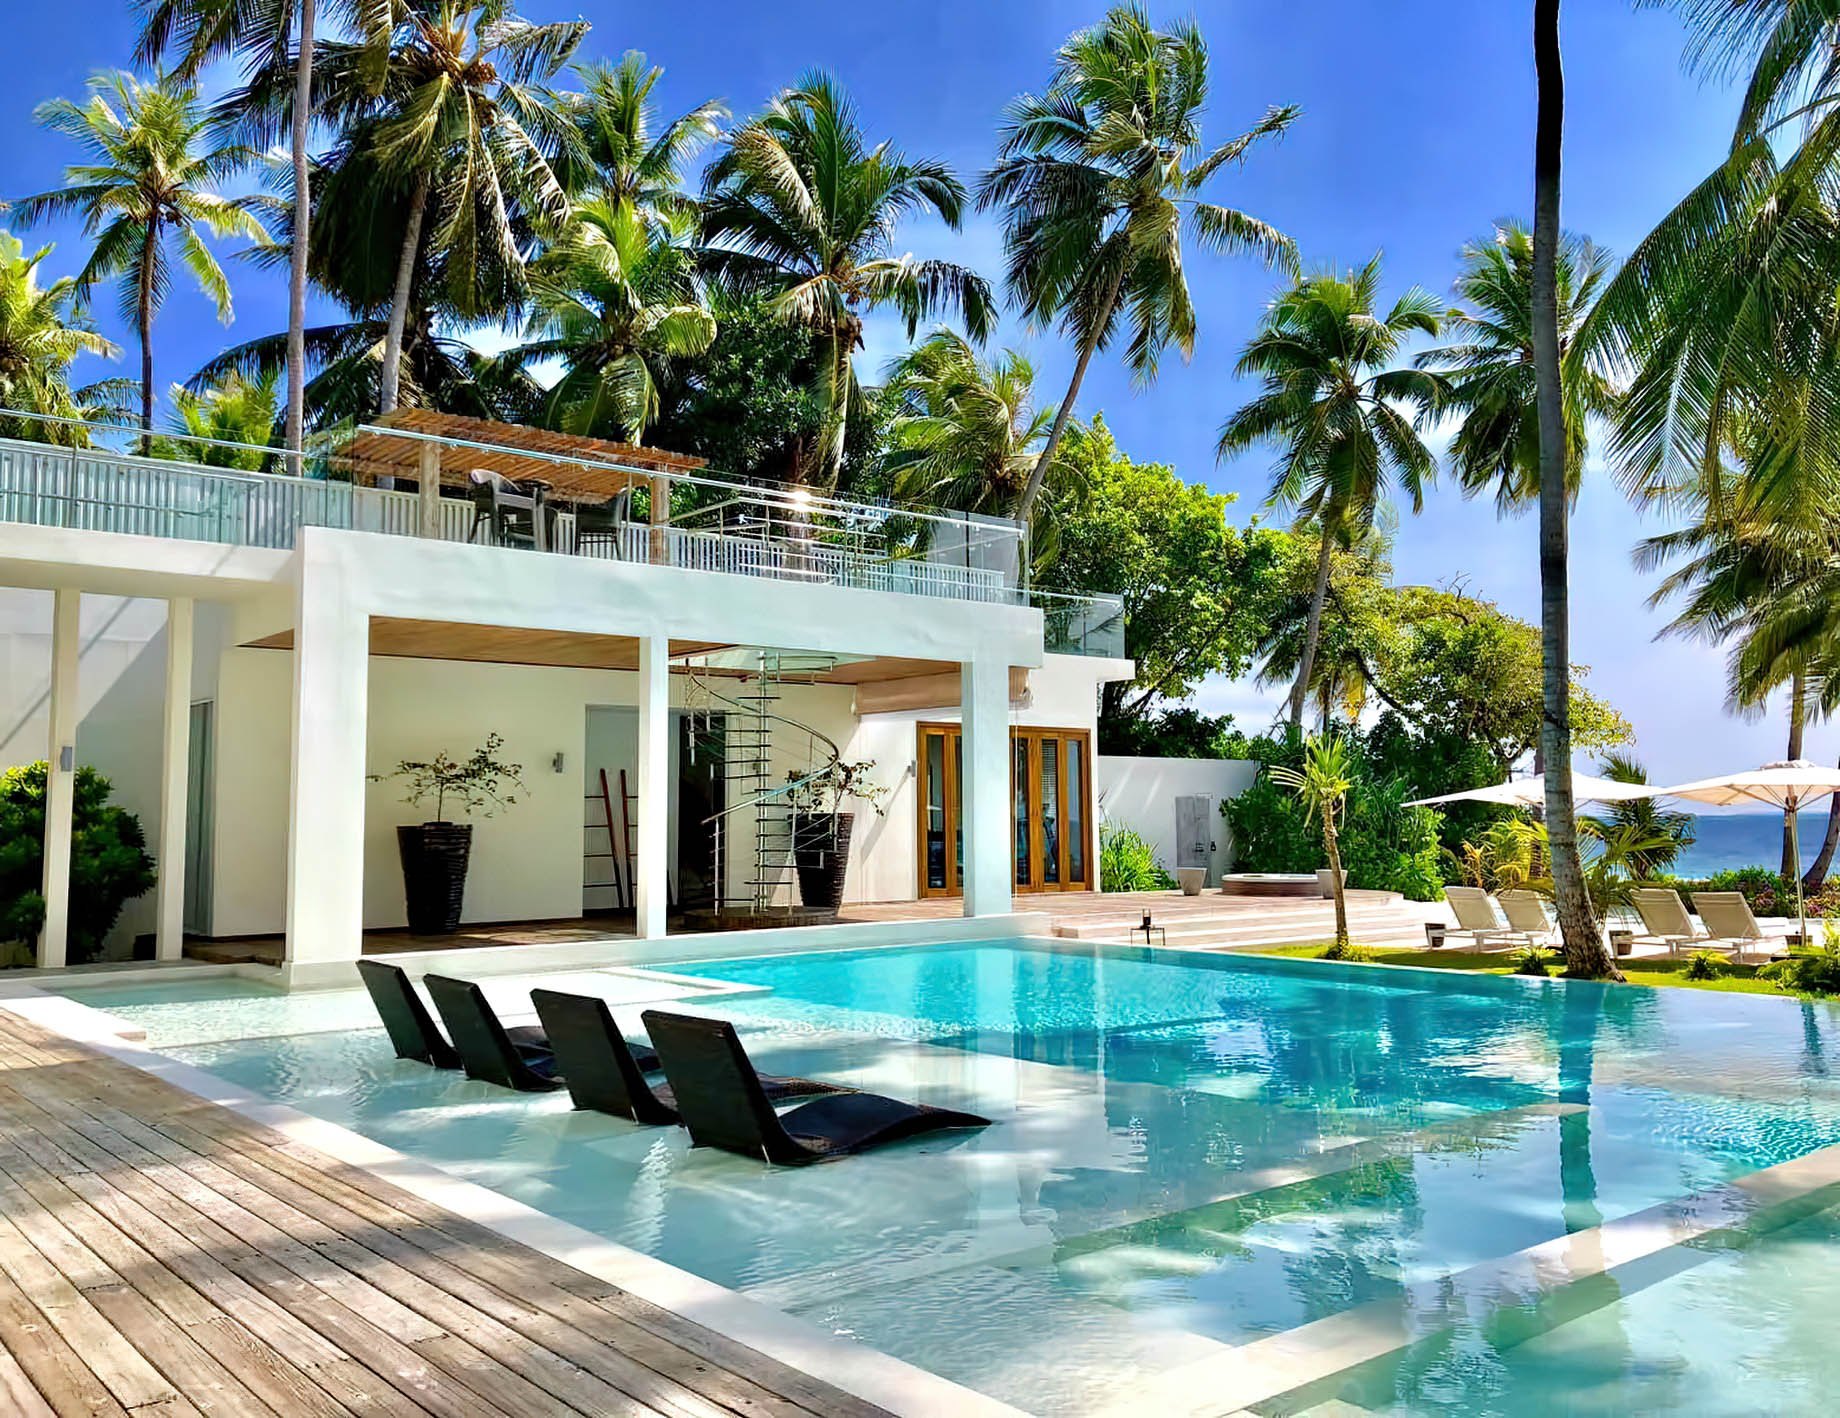 Amilla Fushi Resort and Residences - Baa Atoll, Maldives - Amilla Beach Estate Oceanfront Pool